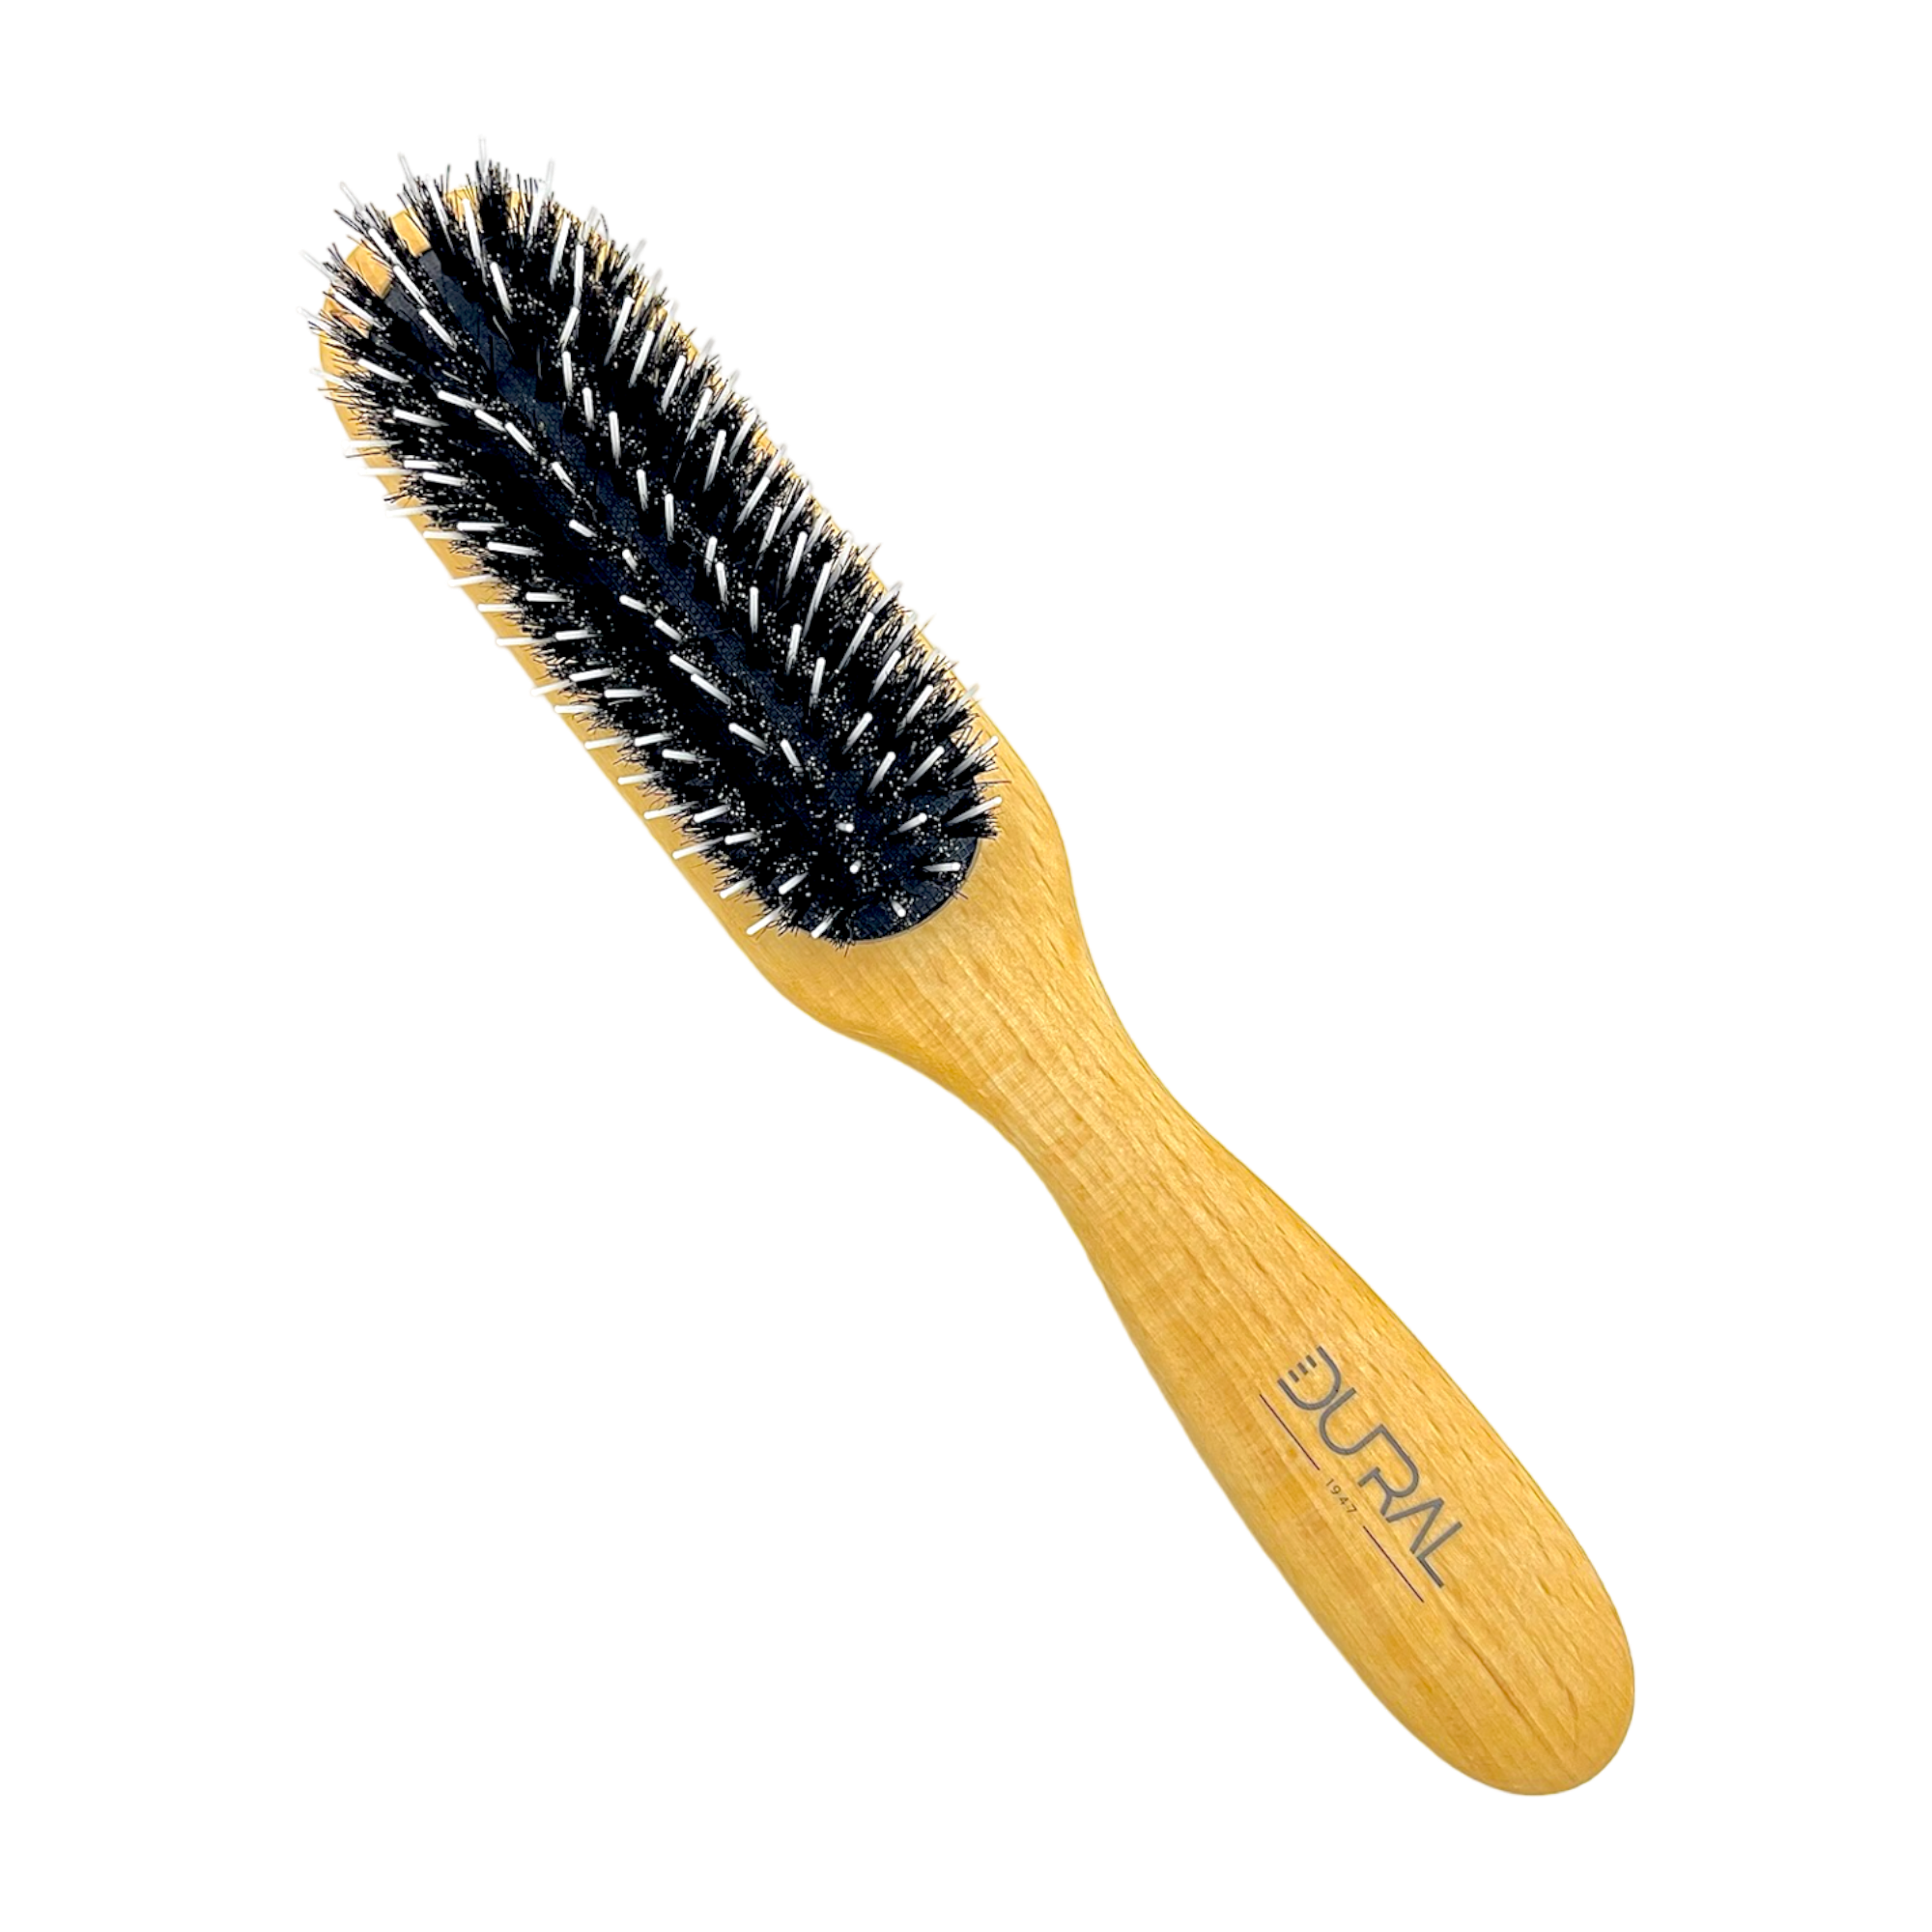 Dural Beech wood rubber cushion hair brush with boar bristles and nylon pins